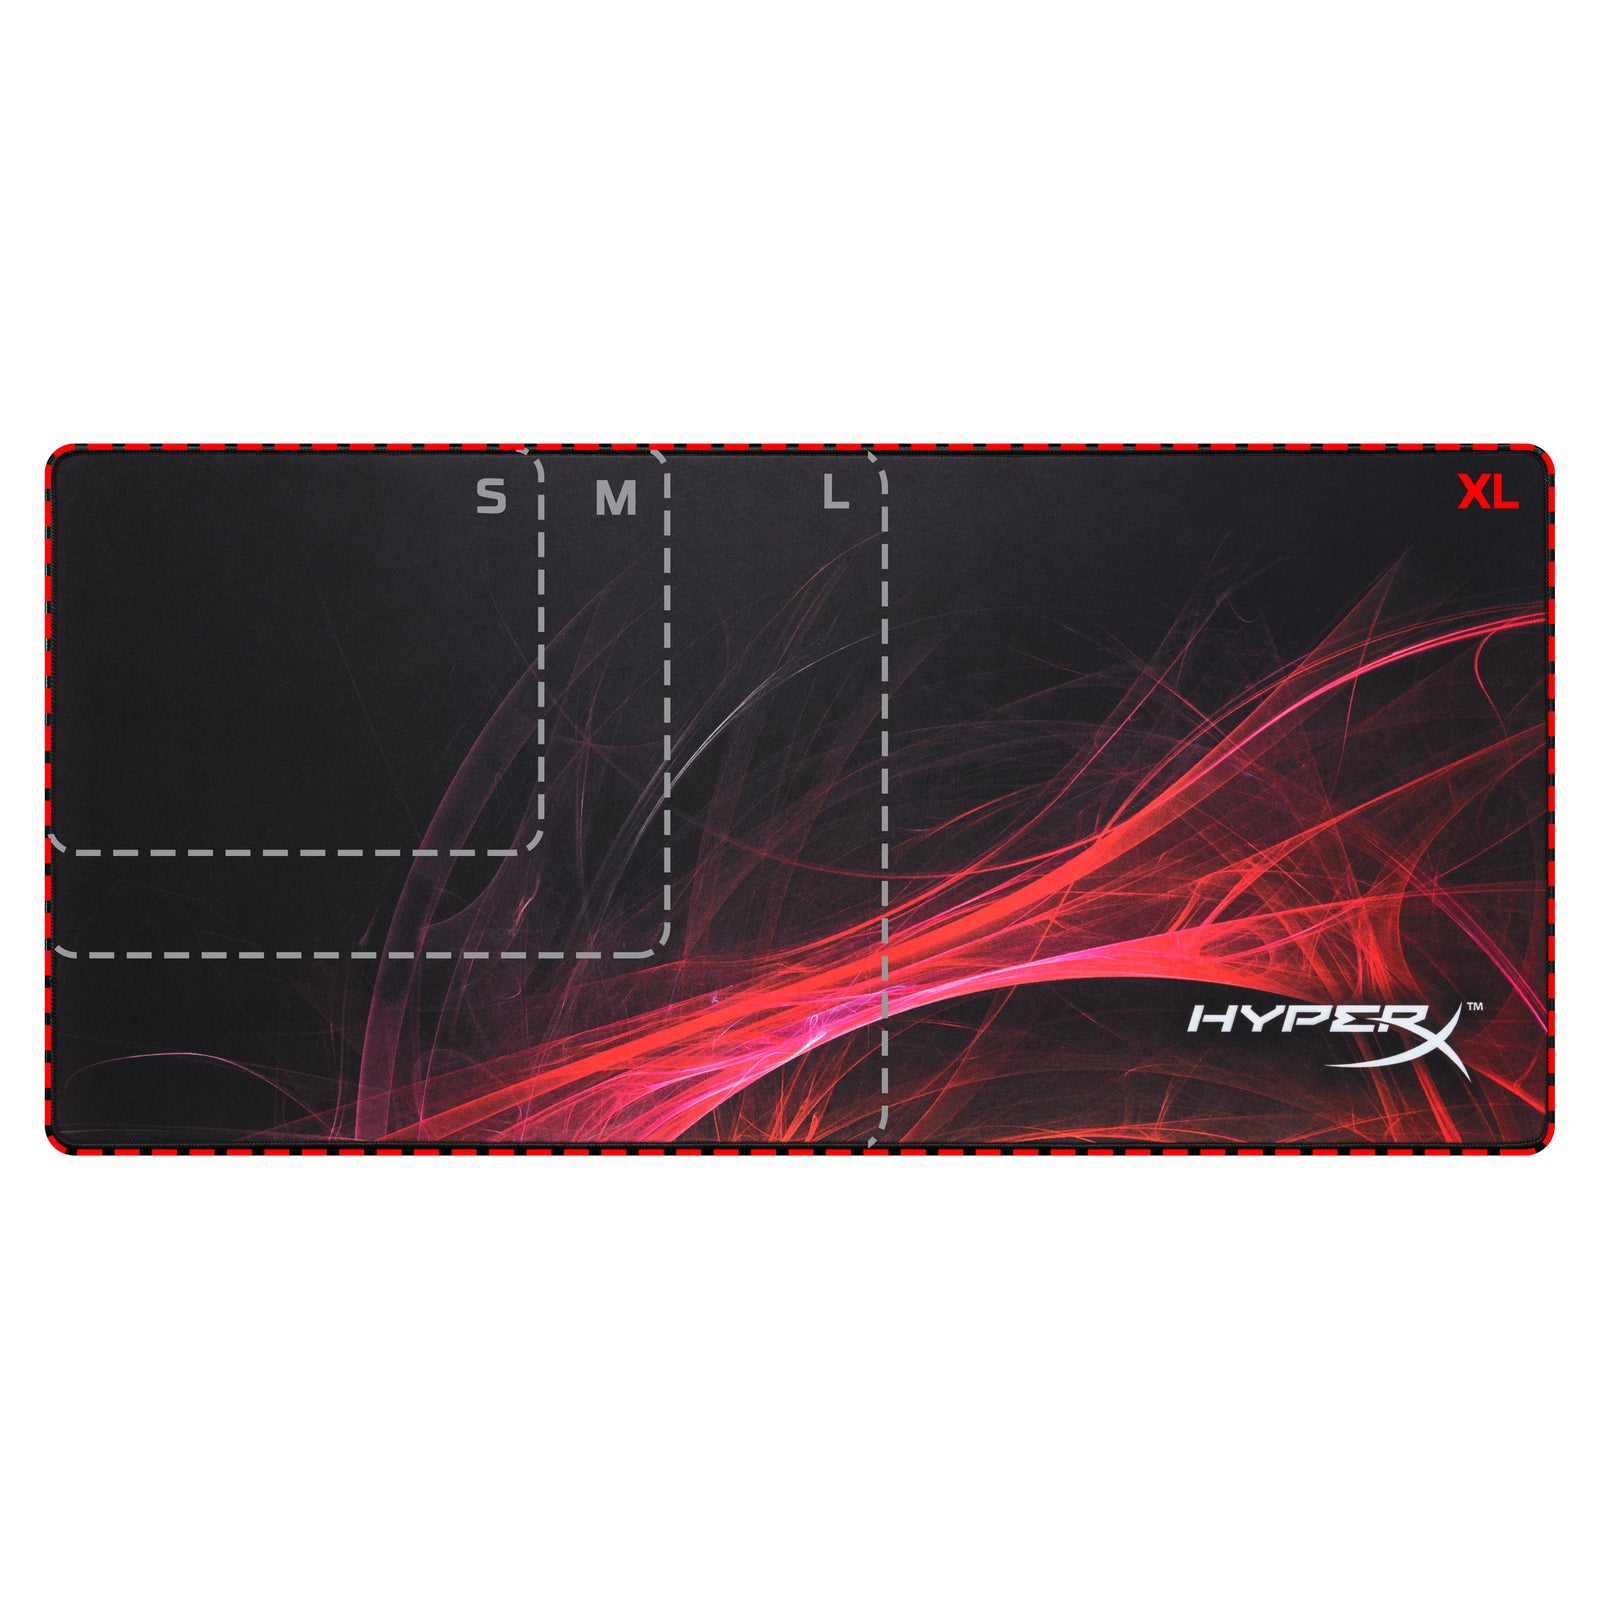  HyperX: Tapis de souris